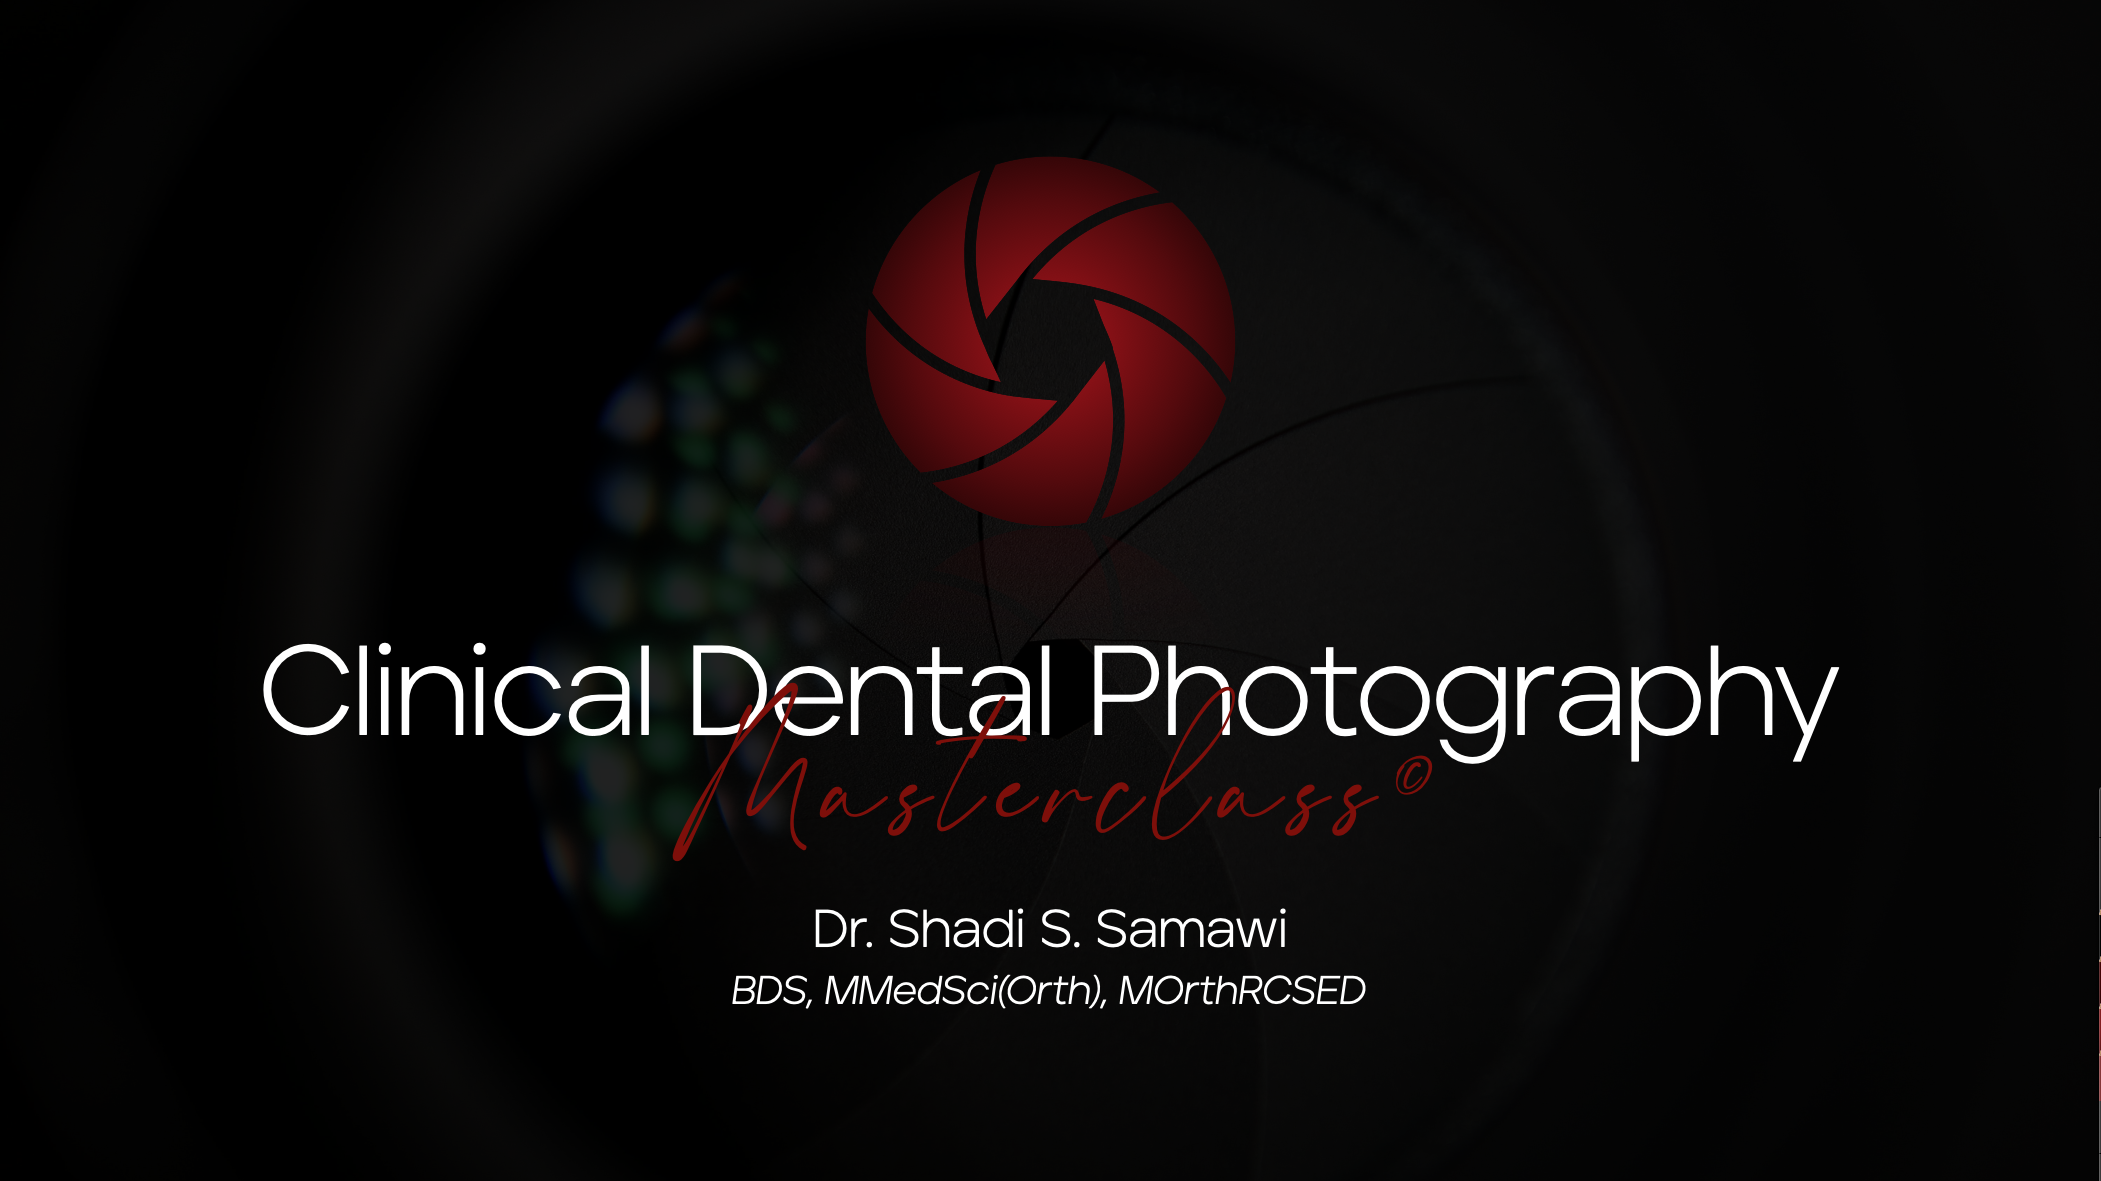 Clinical Dental Photography Masterclass by Dr Shadi Samawi